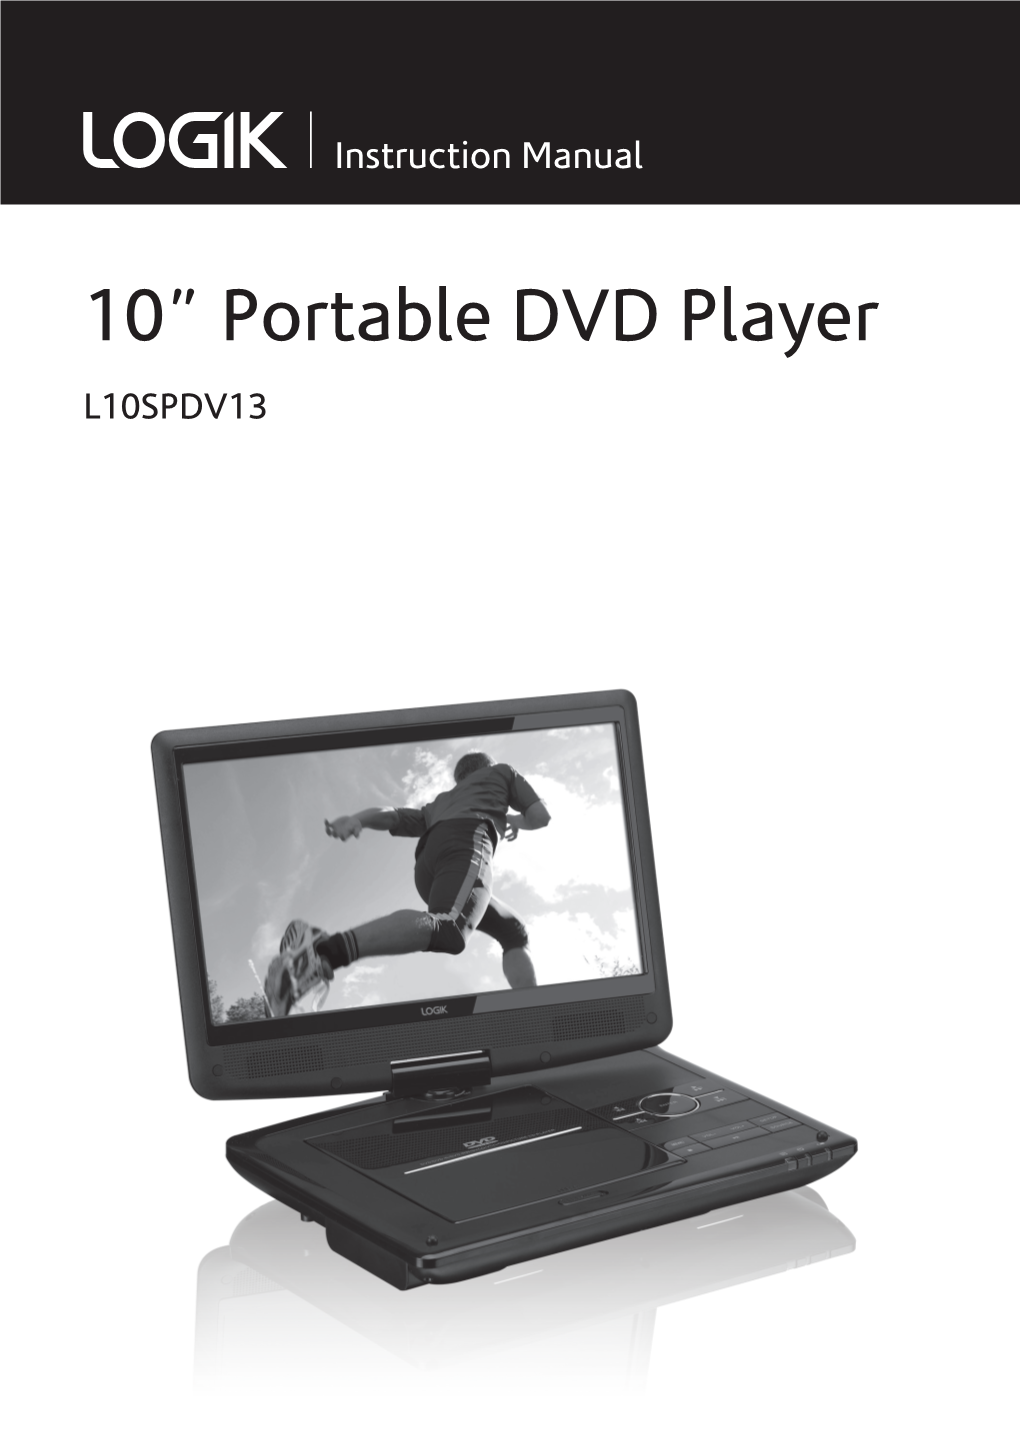 LOGIK PORTABLE DVD PLAYER L10SPDV13 Manual